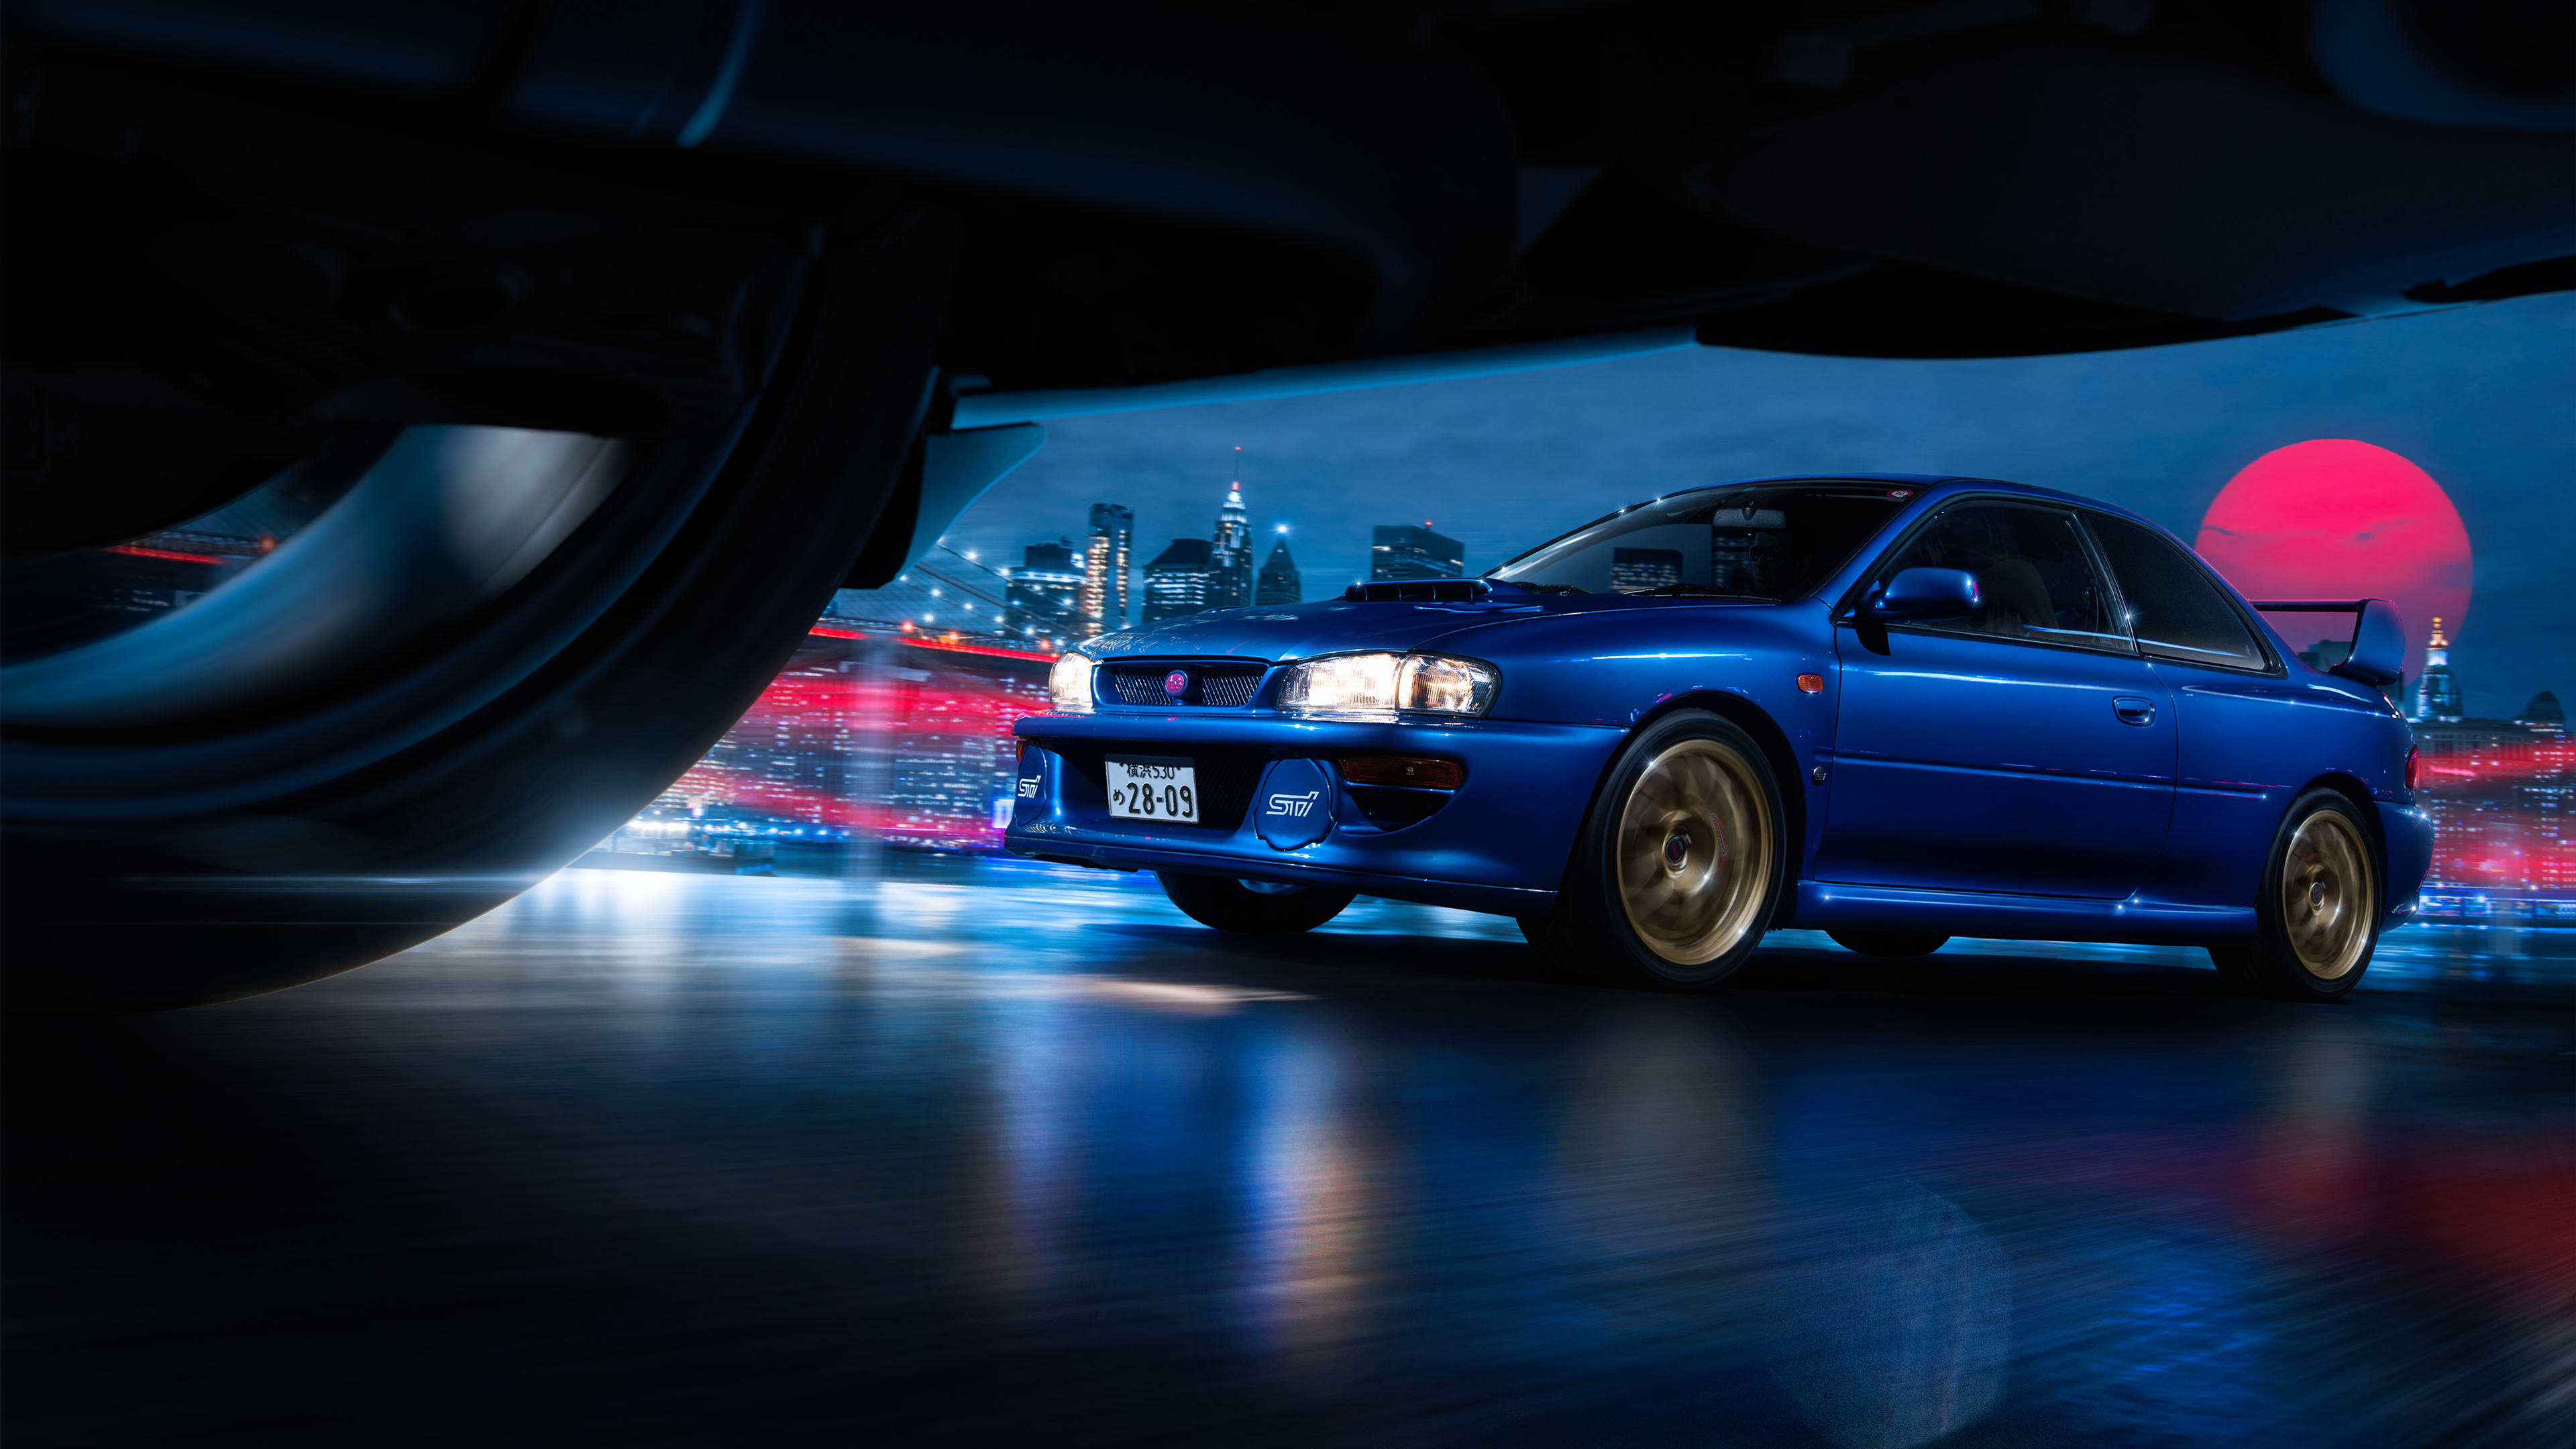 Subaru Impreza Wallpapers